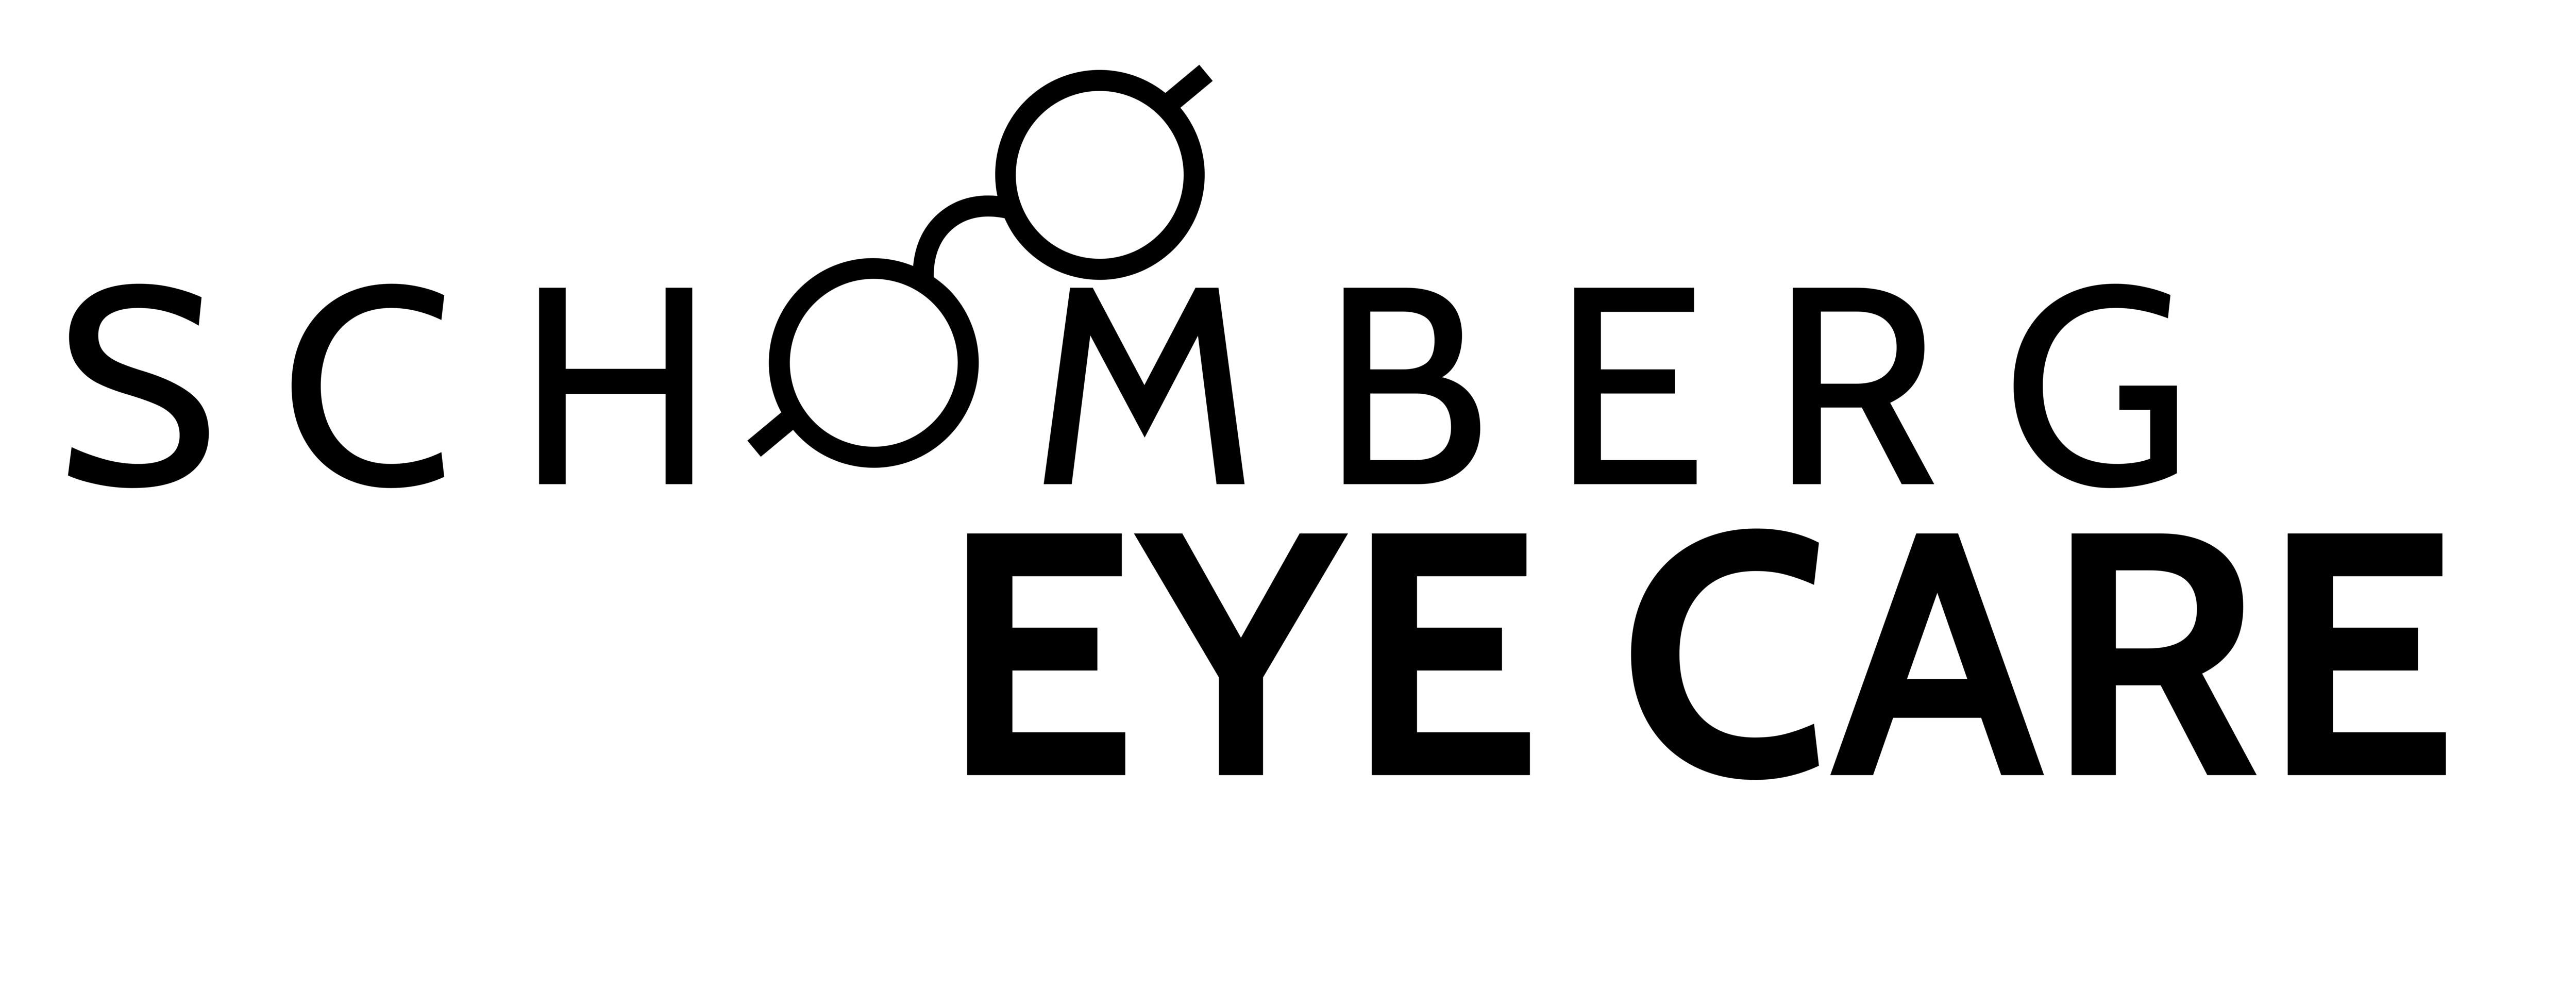 Schomberg Eye Care